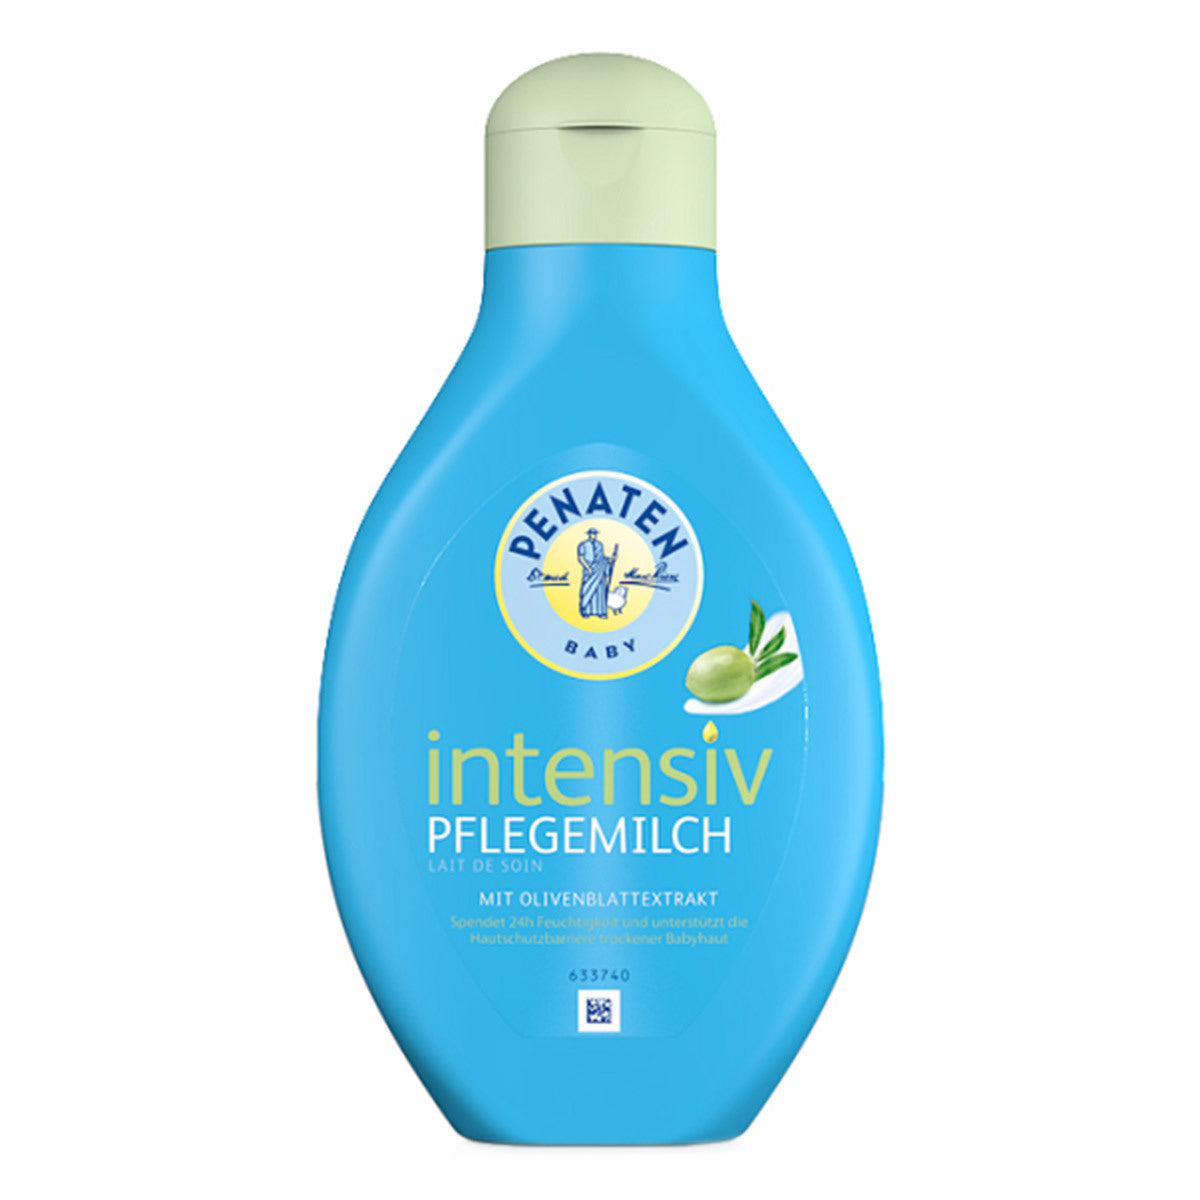 Primary image of Intensiv Pflegemilch (Intensive Care Milk)